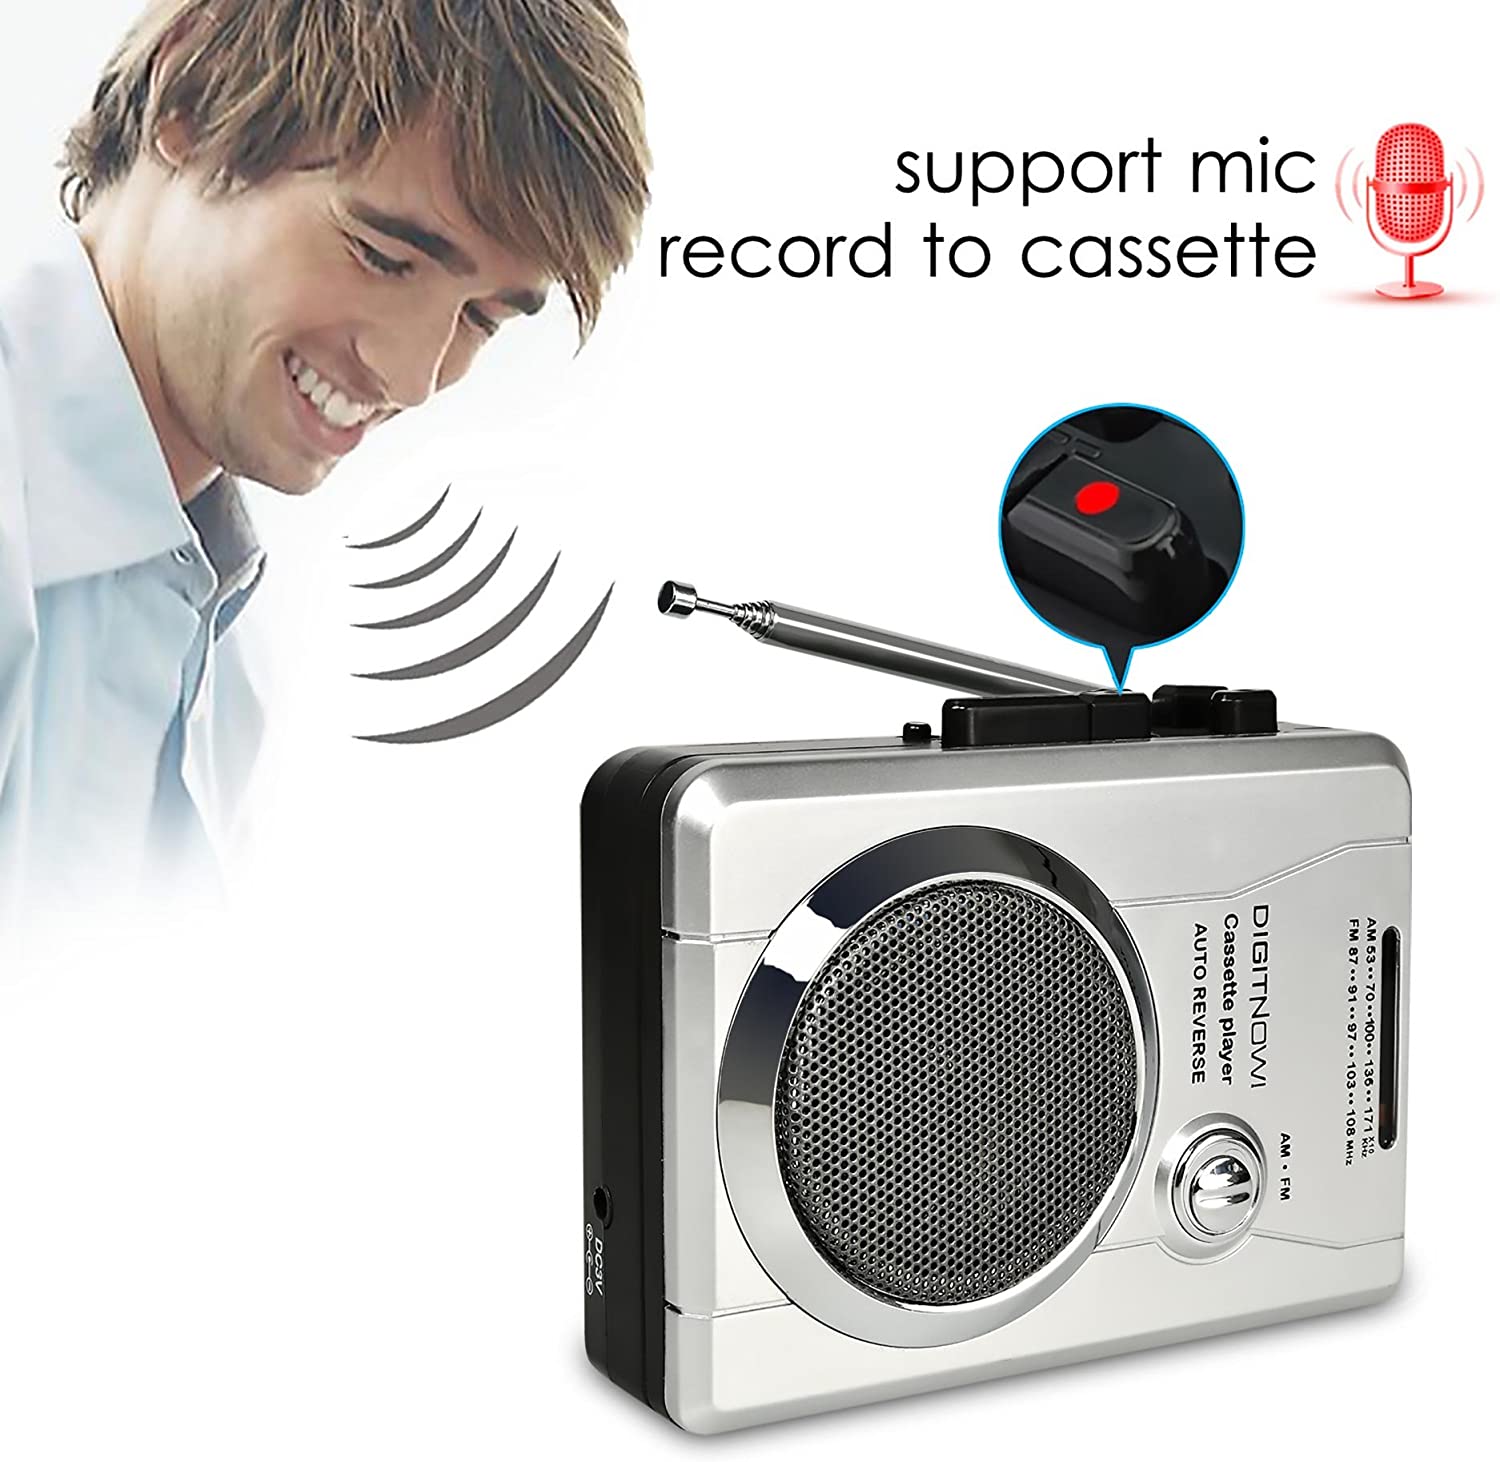 DIGITNOW Cassette Player Recorder AM/FM Pocket Radio and Voice Audio P